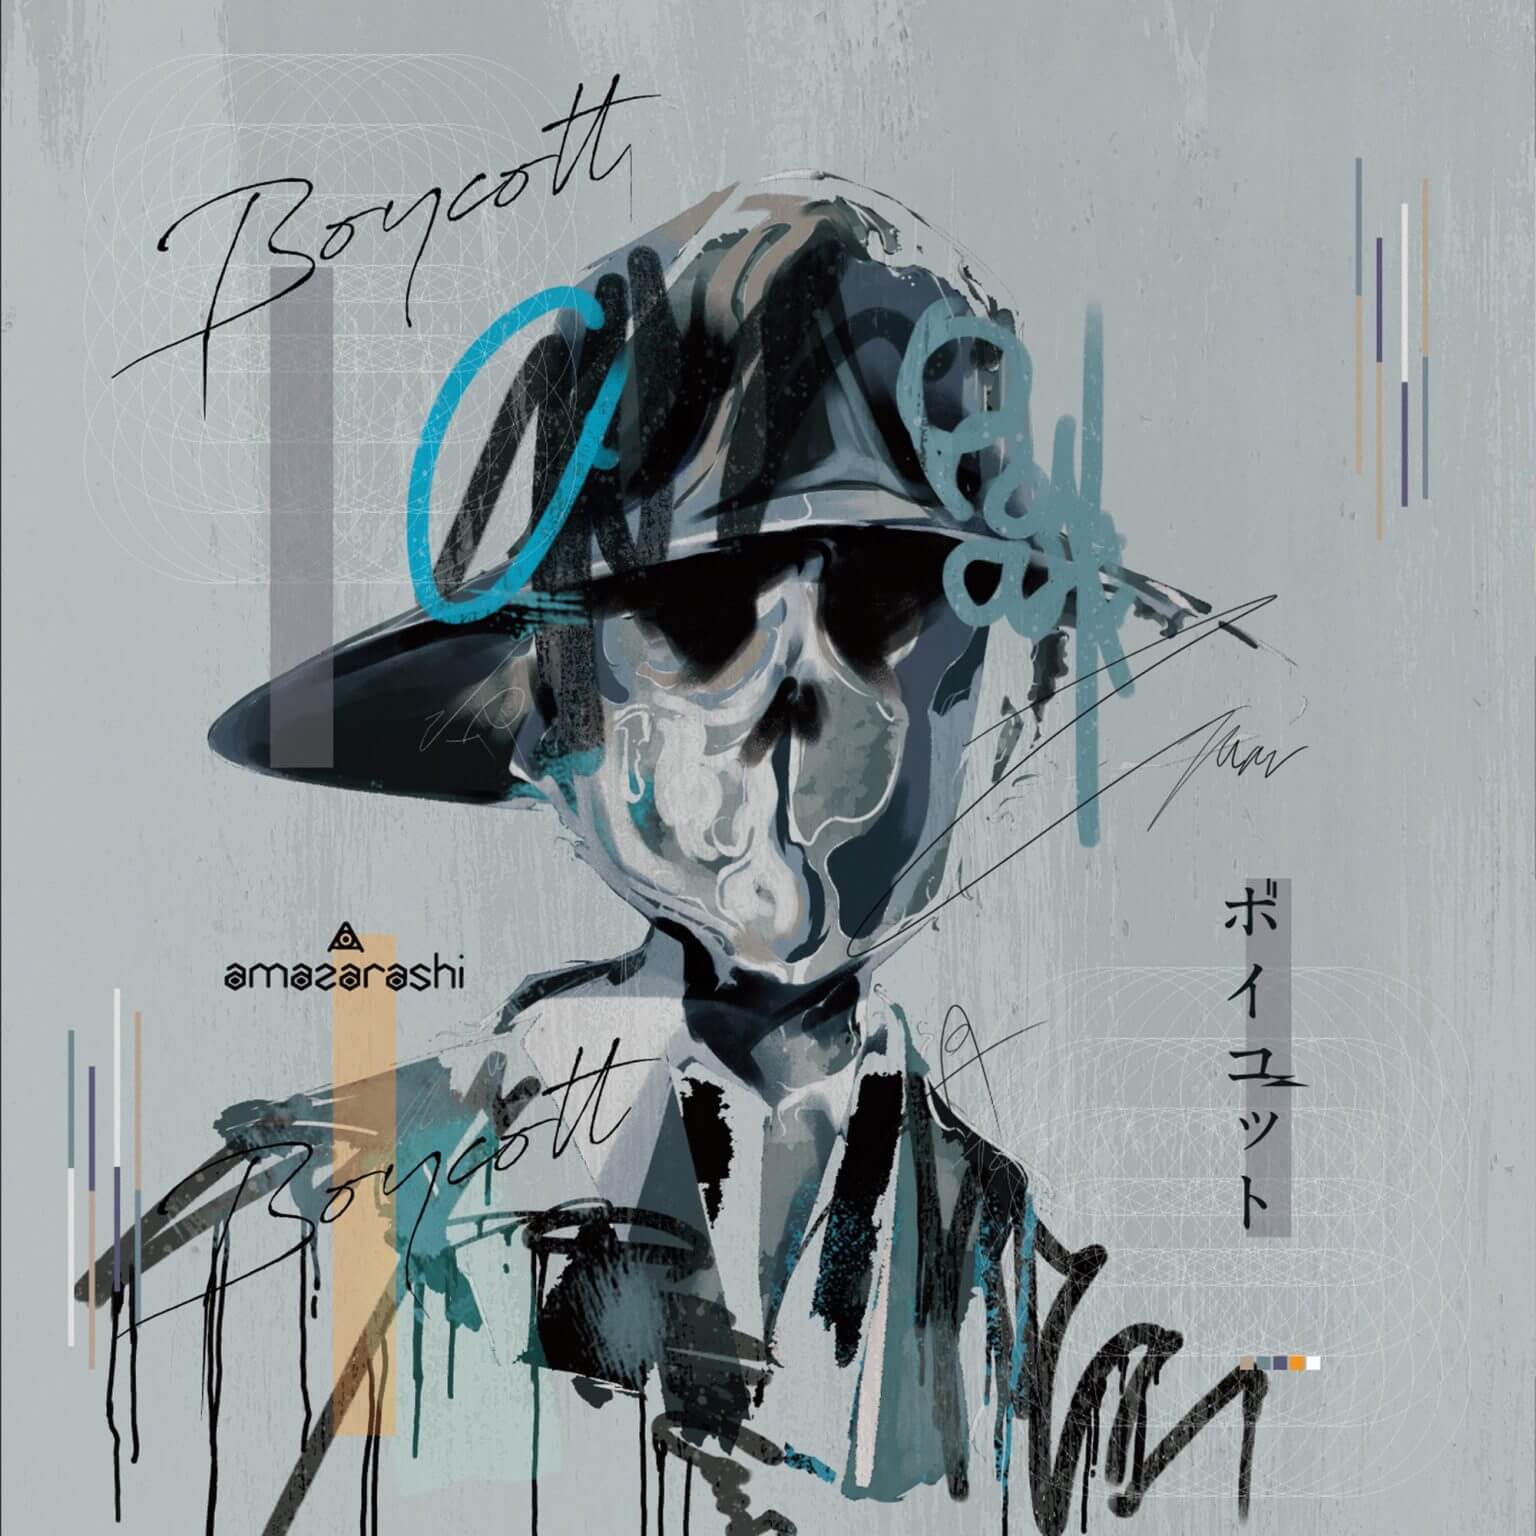 [Album] amazarashi – Boycott [ Album ] | Keinime OST